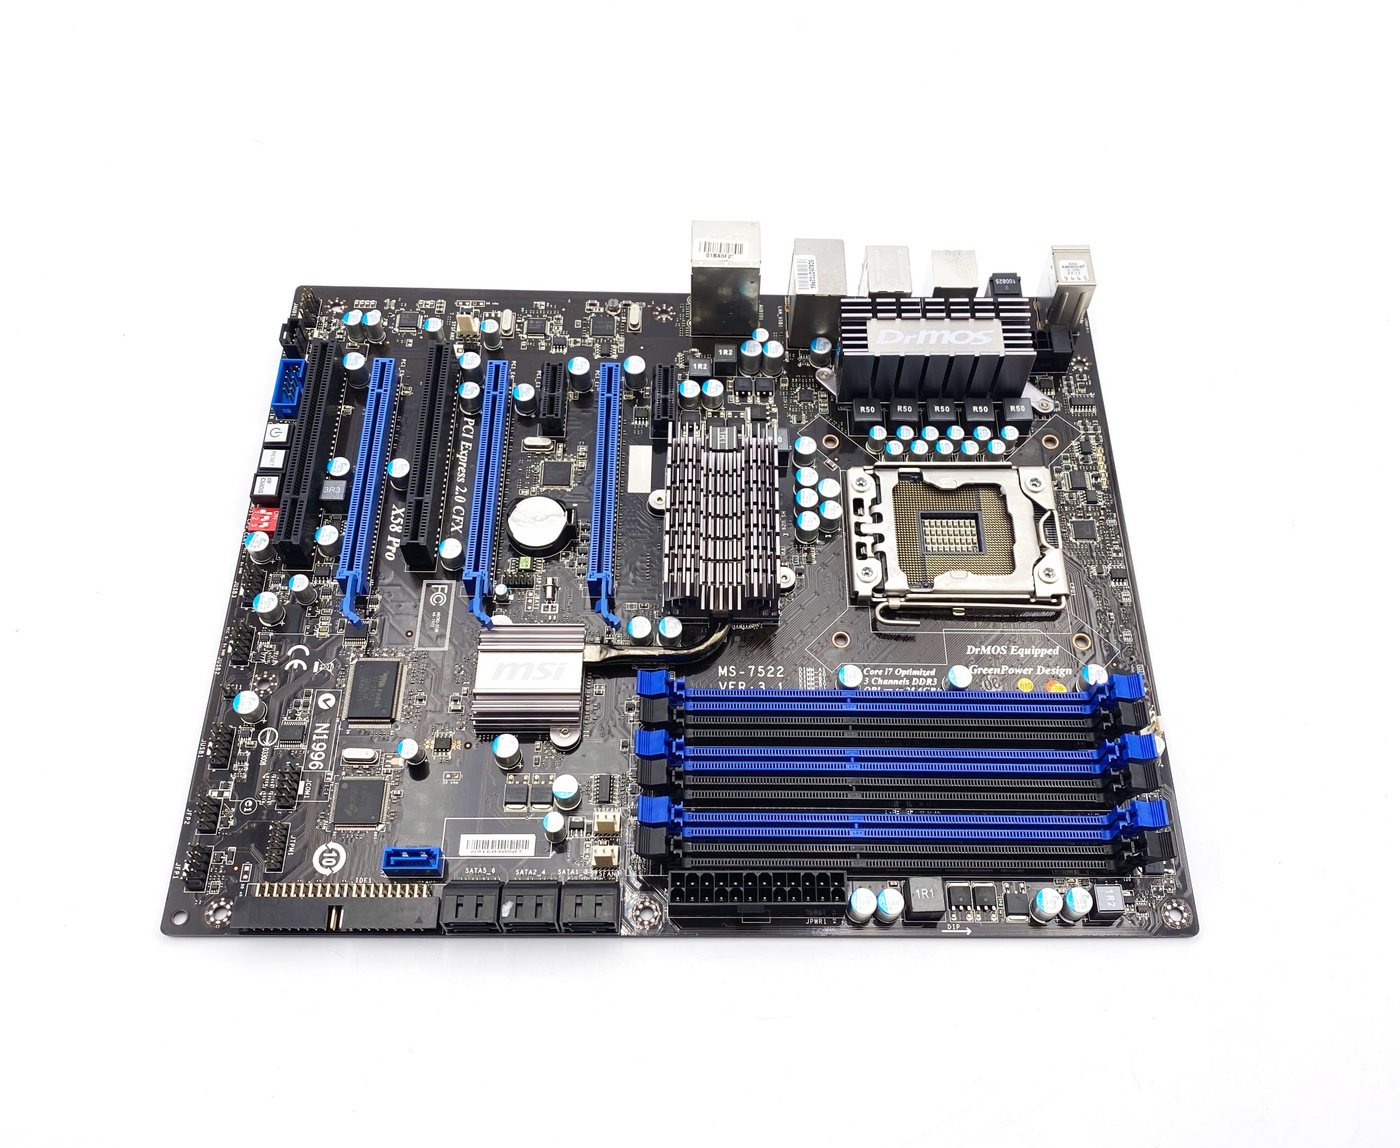 MSI MSI X58 Pro-E Mainboard Intel LGA 1366 eSATA FireWire DDR3 Motherboar Mainboard von MSI